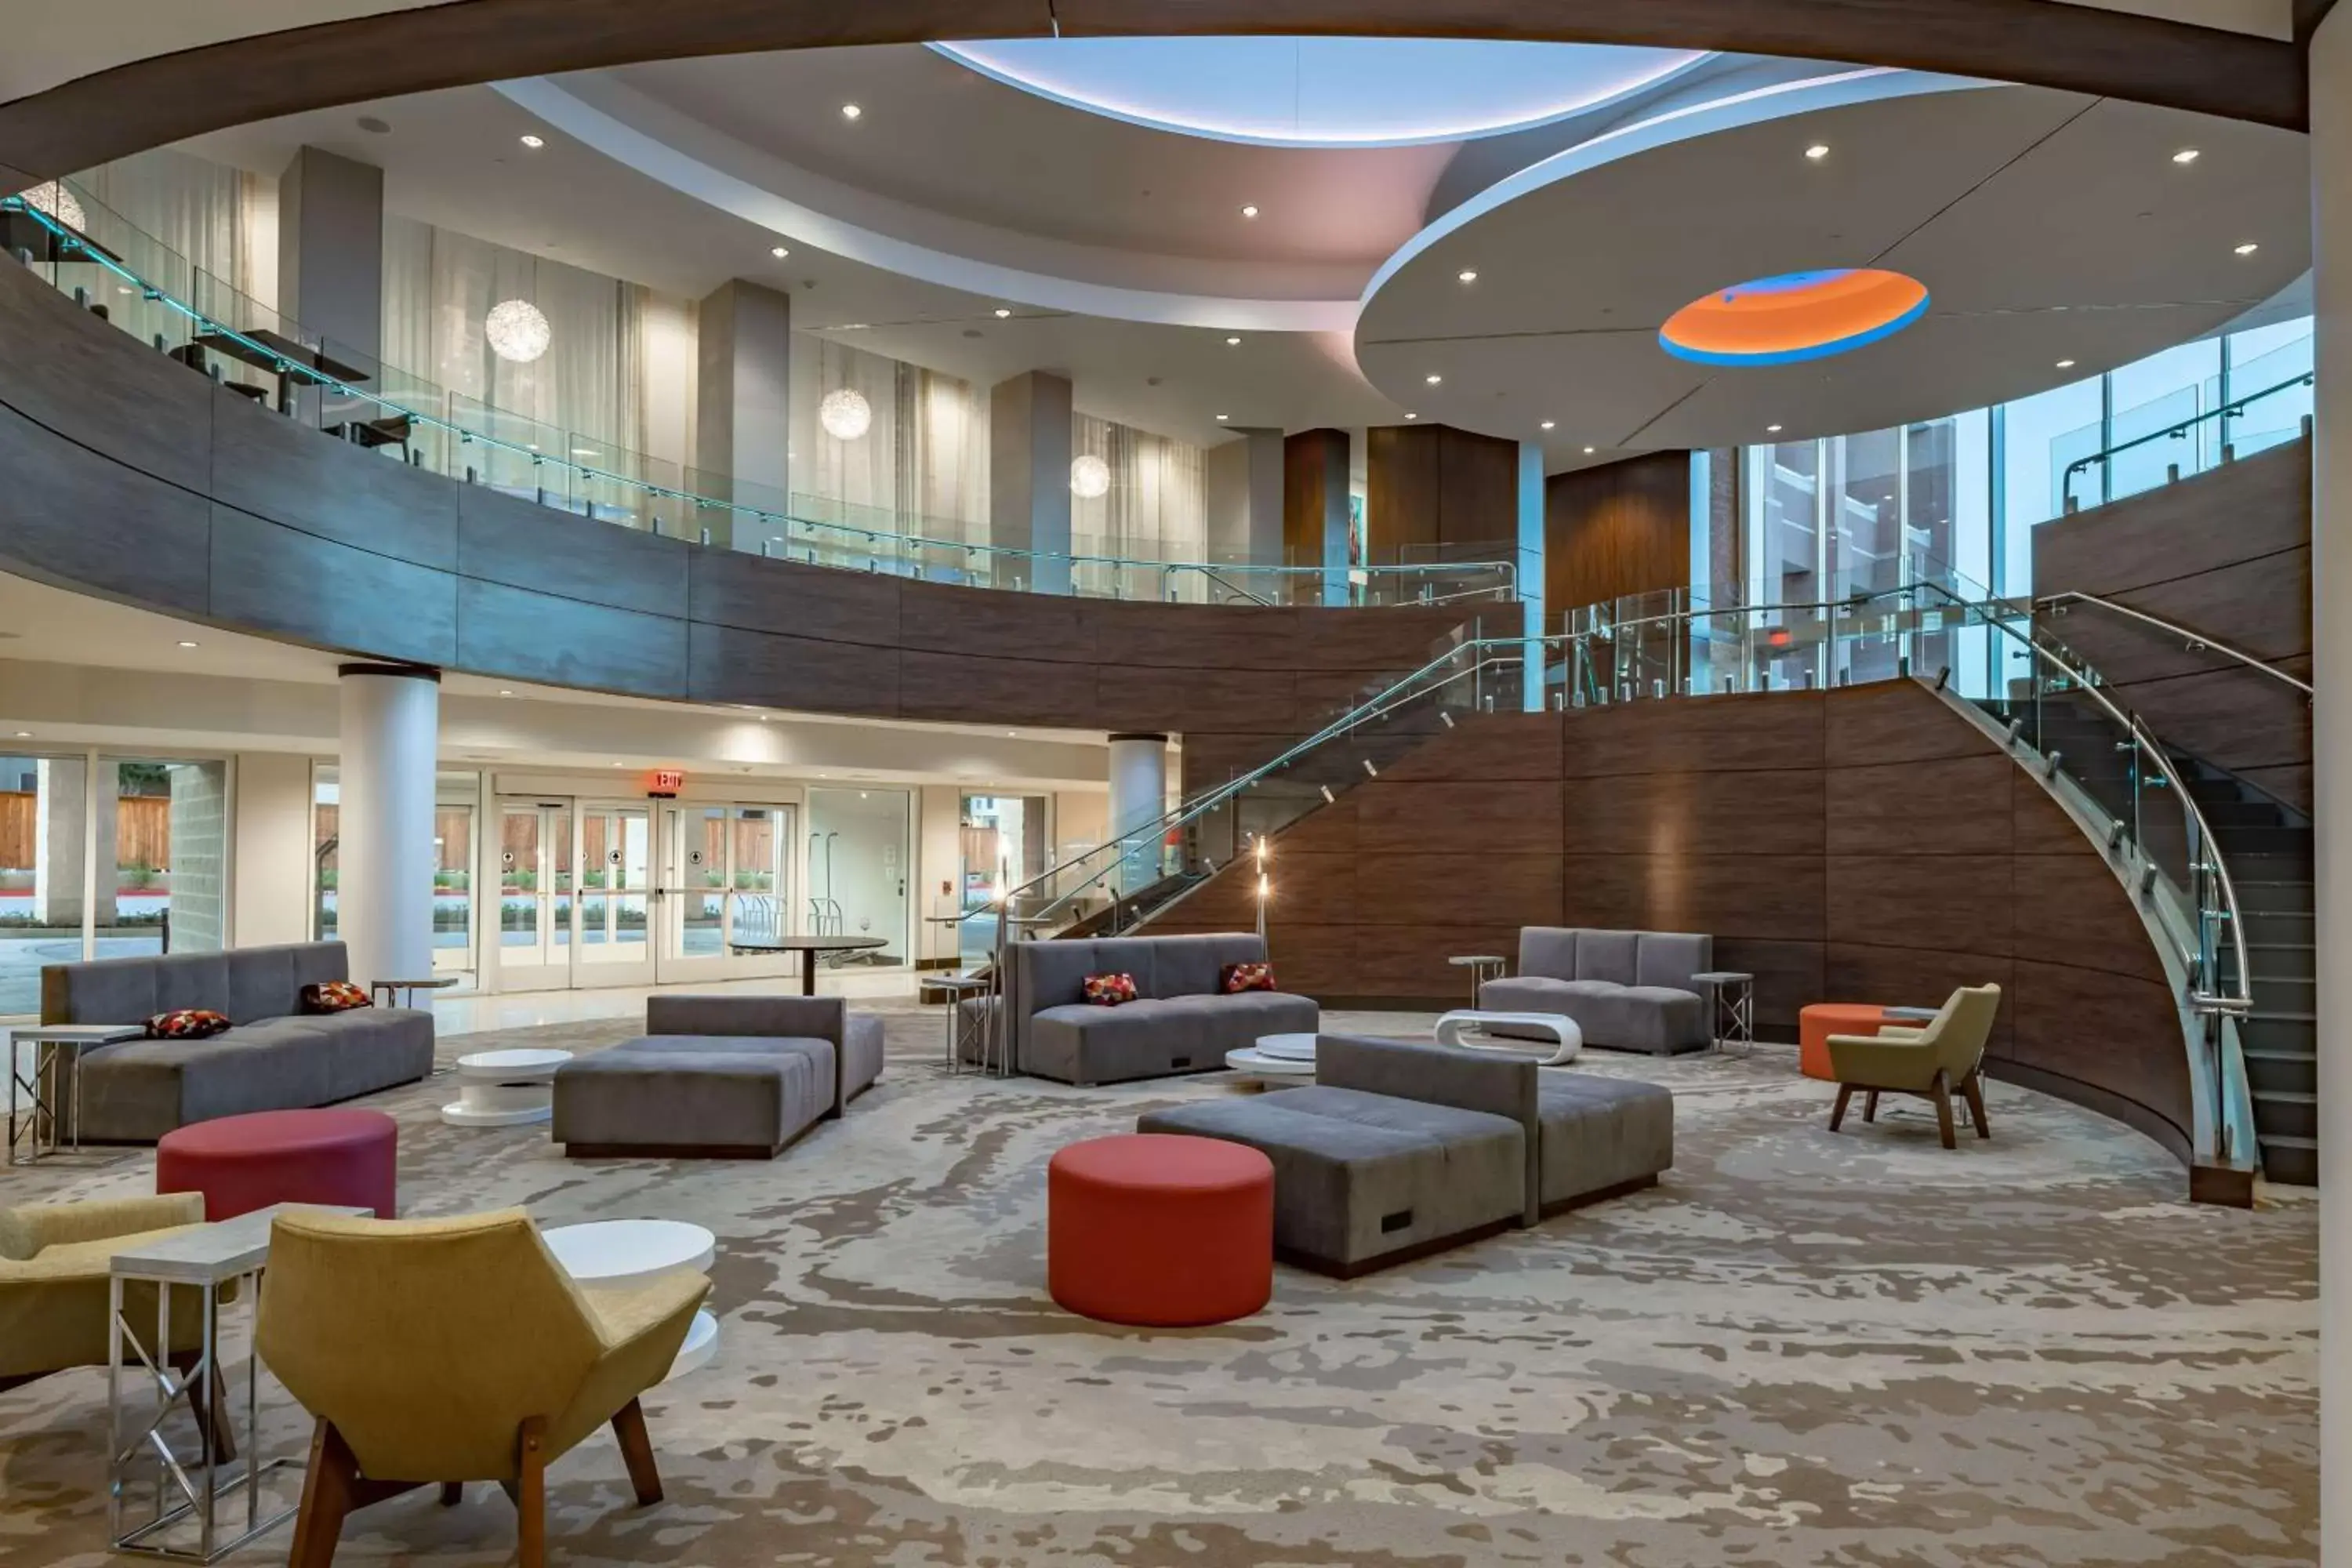 Lobby or reception in Hilton Garden Inn Dallas At Hurst Conference Center